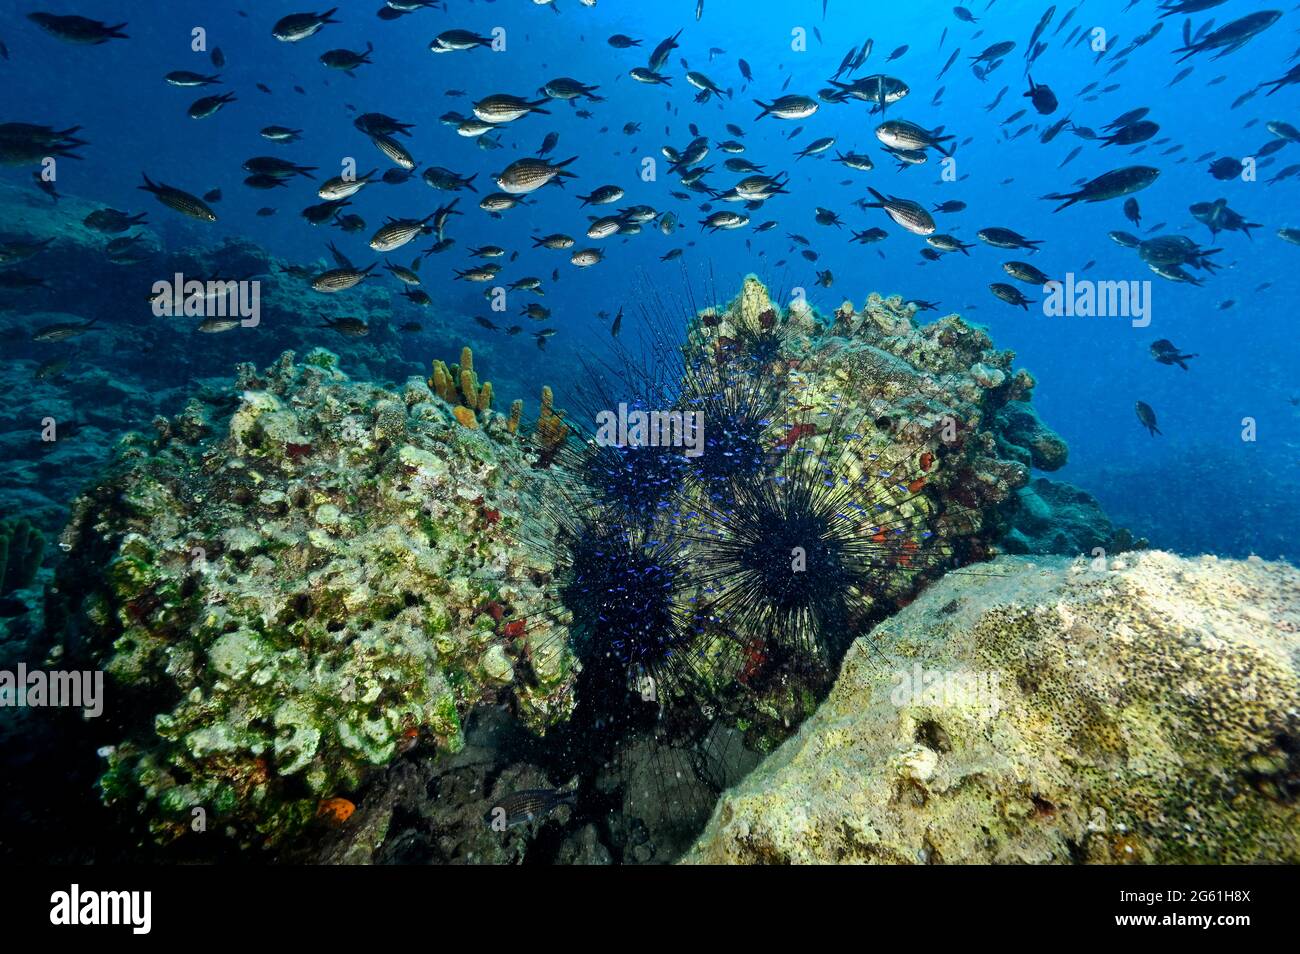 Reef scenic with Chromis chromis and invasive long-spine sea urchin where juvenile chromis sheltering, Gokova Bay Marine Protected Area Turkey. Stock Photo